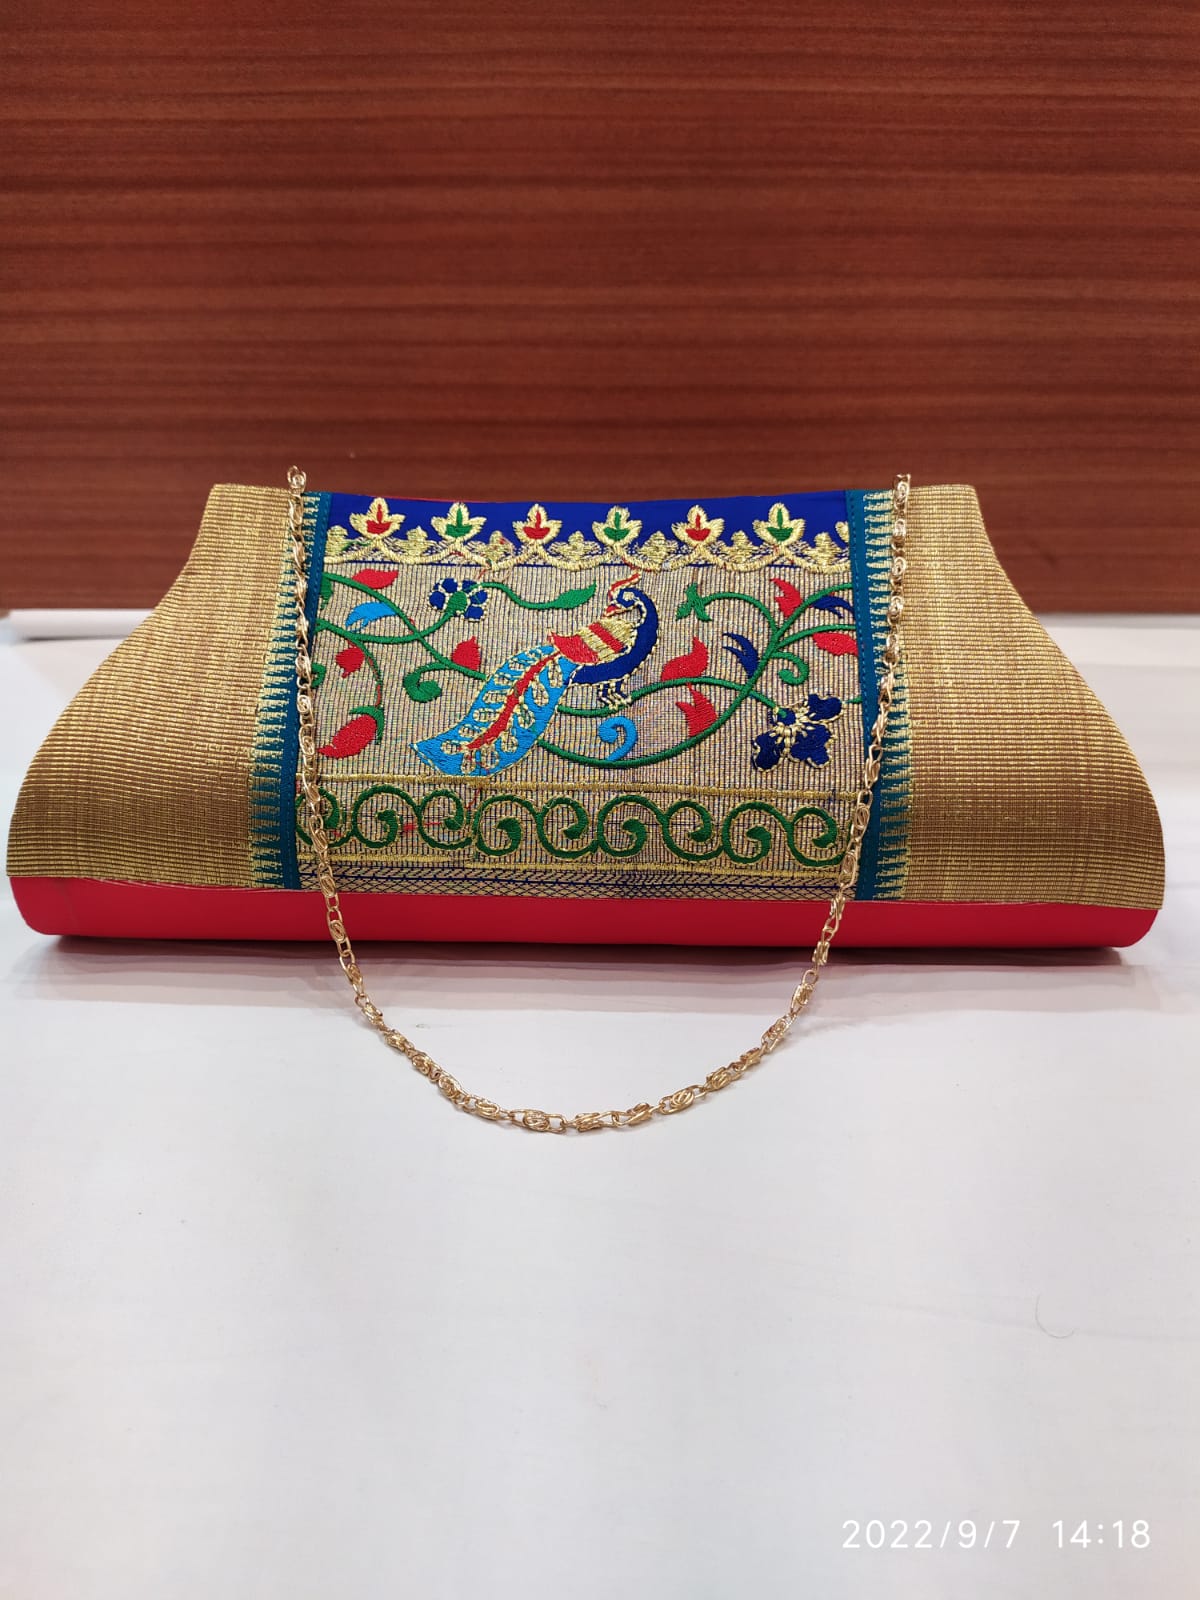 Paithani Purses Wholesale | लग्नाच्या साडीवर मॅचिंग अशा पर्स फक्त 100  रुपयात | Wedding Purses - paithani bags in 100rs - TimesXP Marathi